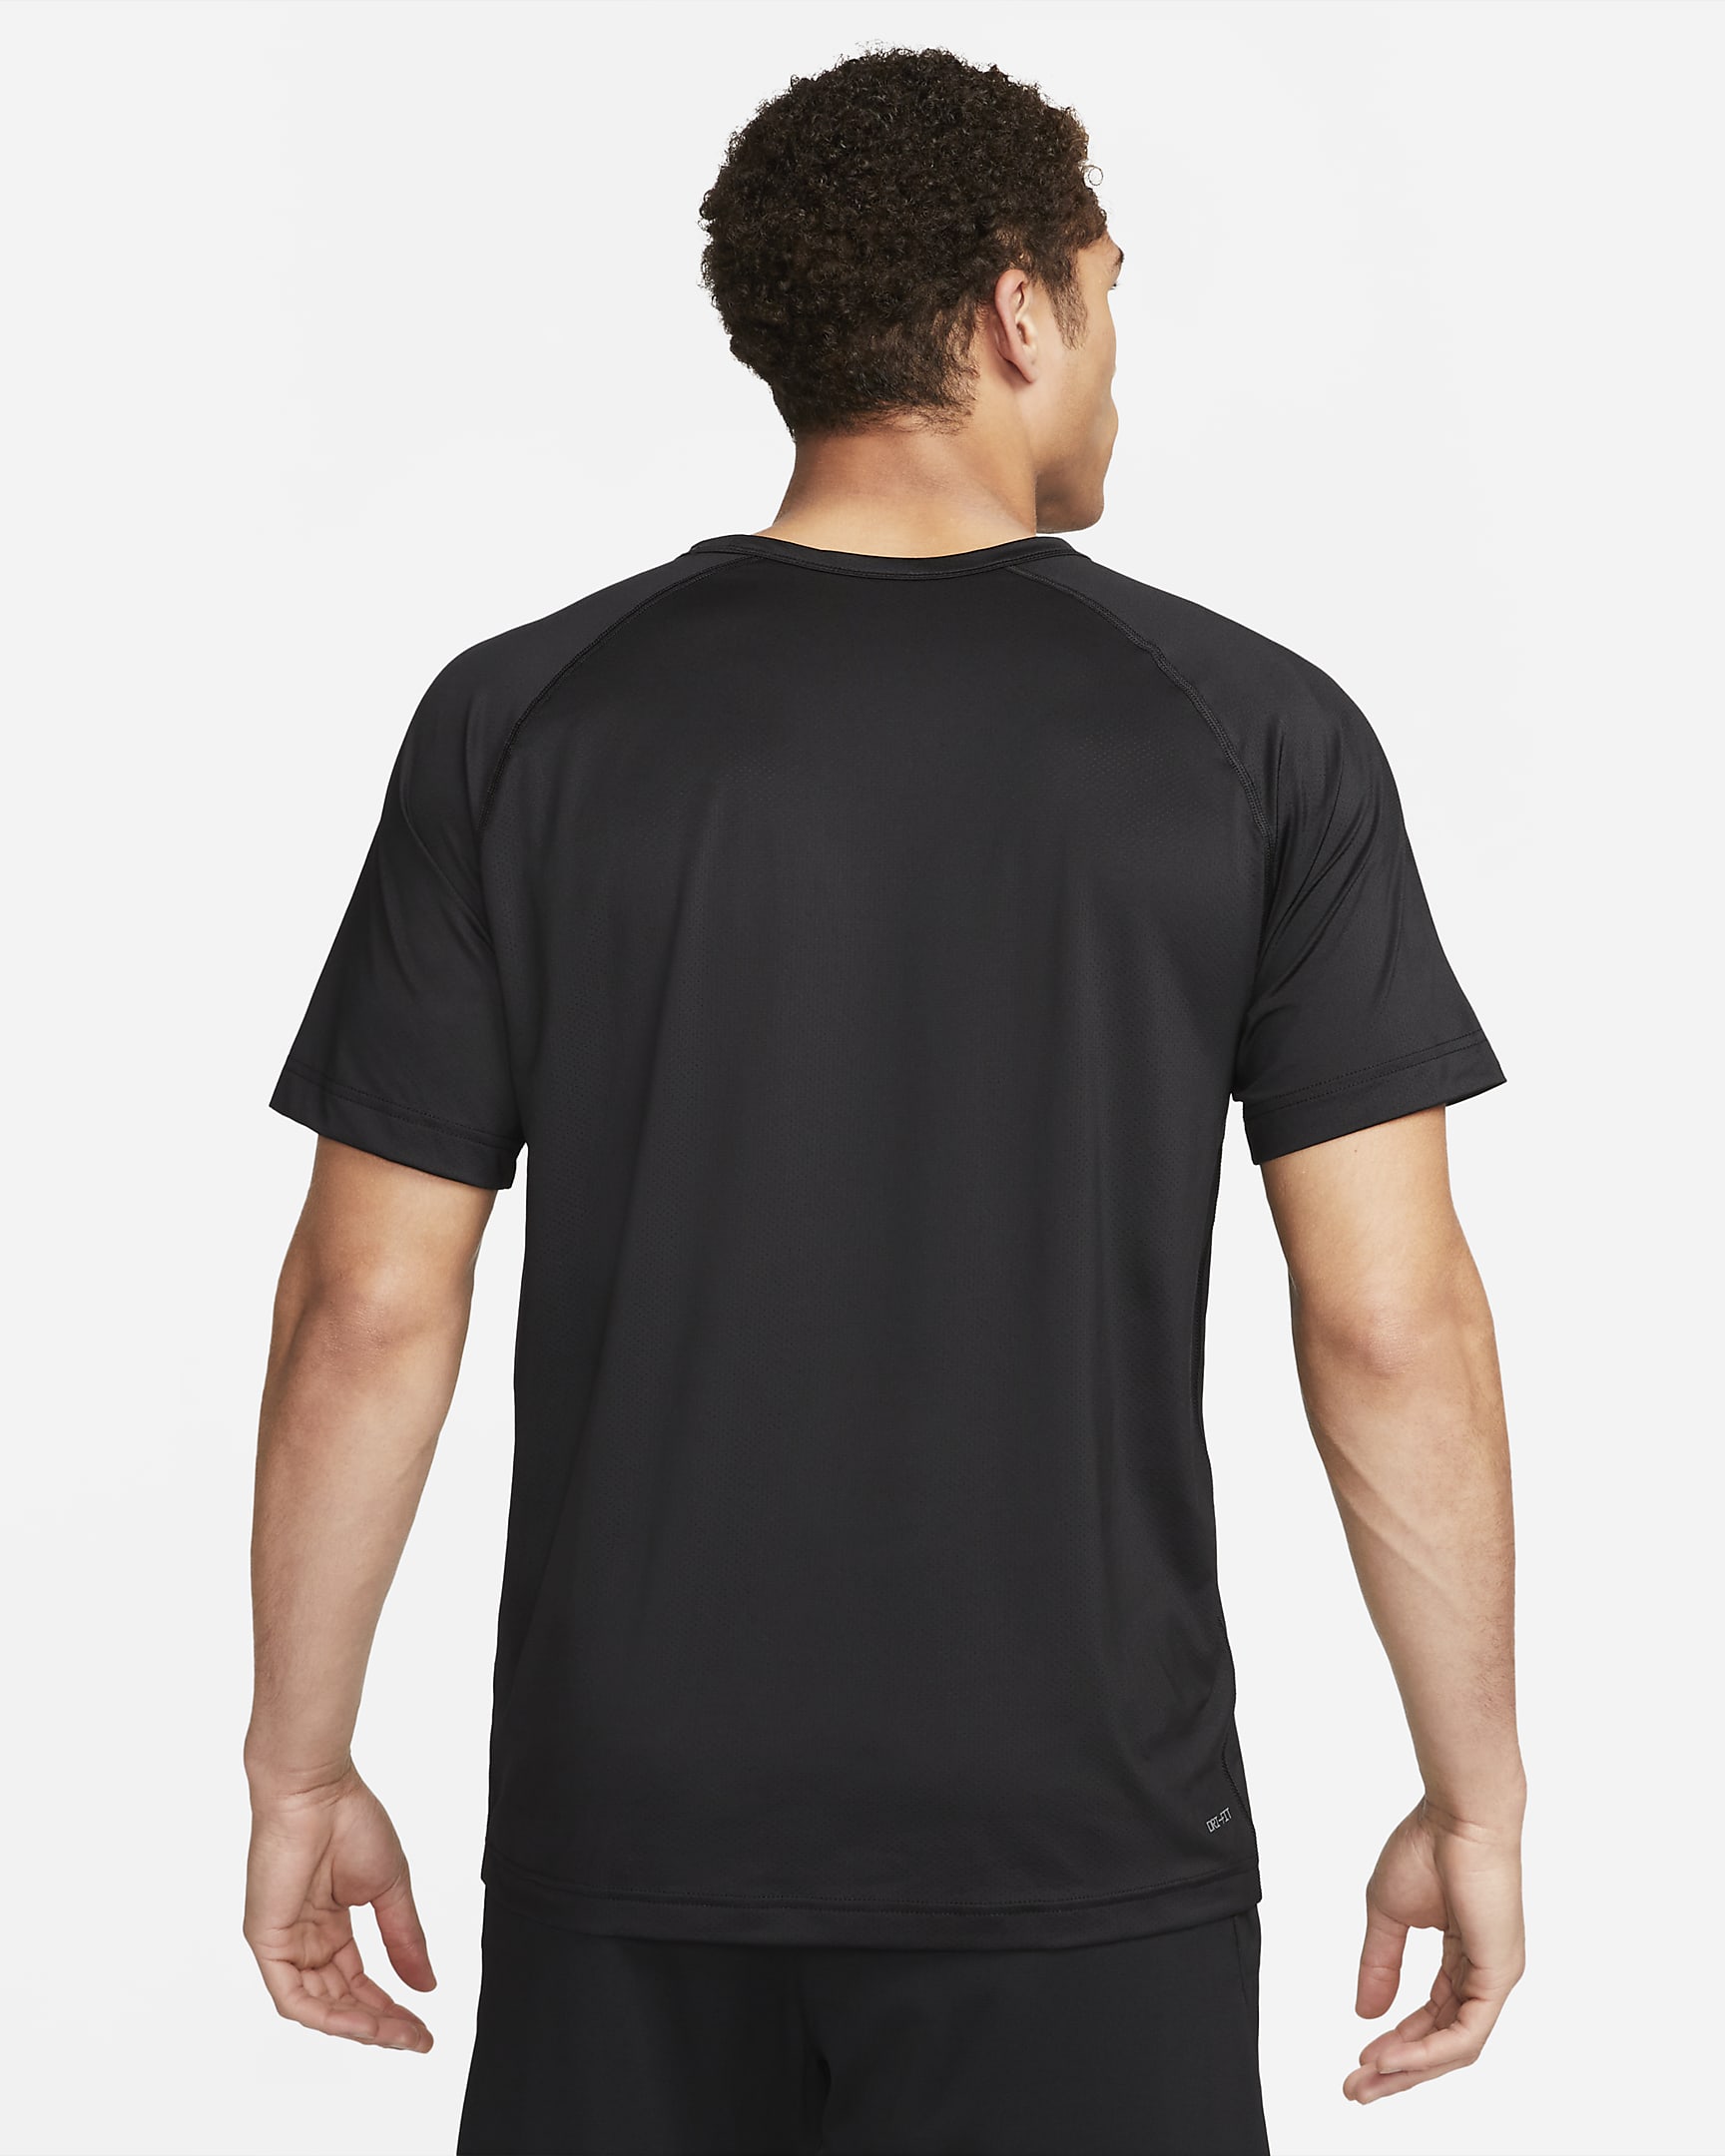 Nike Ready Men's Dri-FIT Short-sleeve Fitness Top - Black/Cool Grey/White